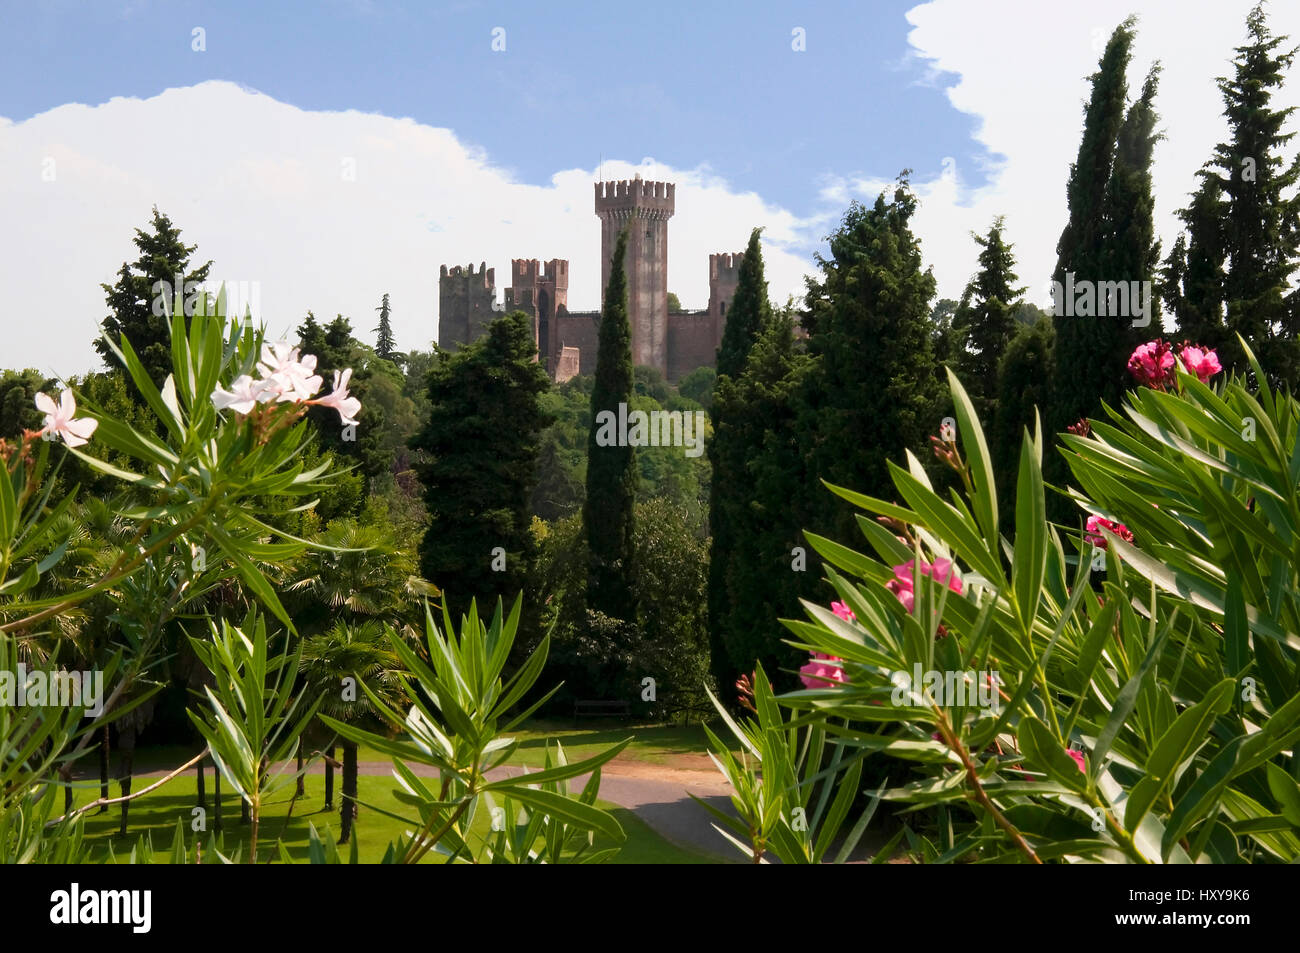 The Beautiful Sigurta Gardens at Peschiera del Garda, south of Sirmione on Lake Garda Italy Stock Photo